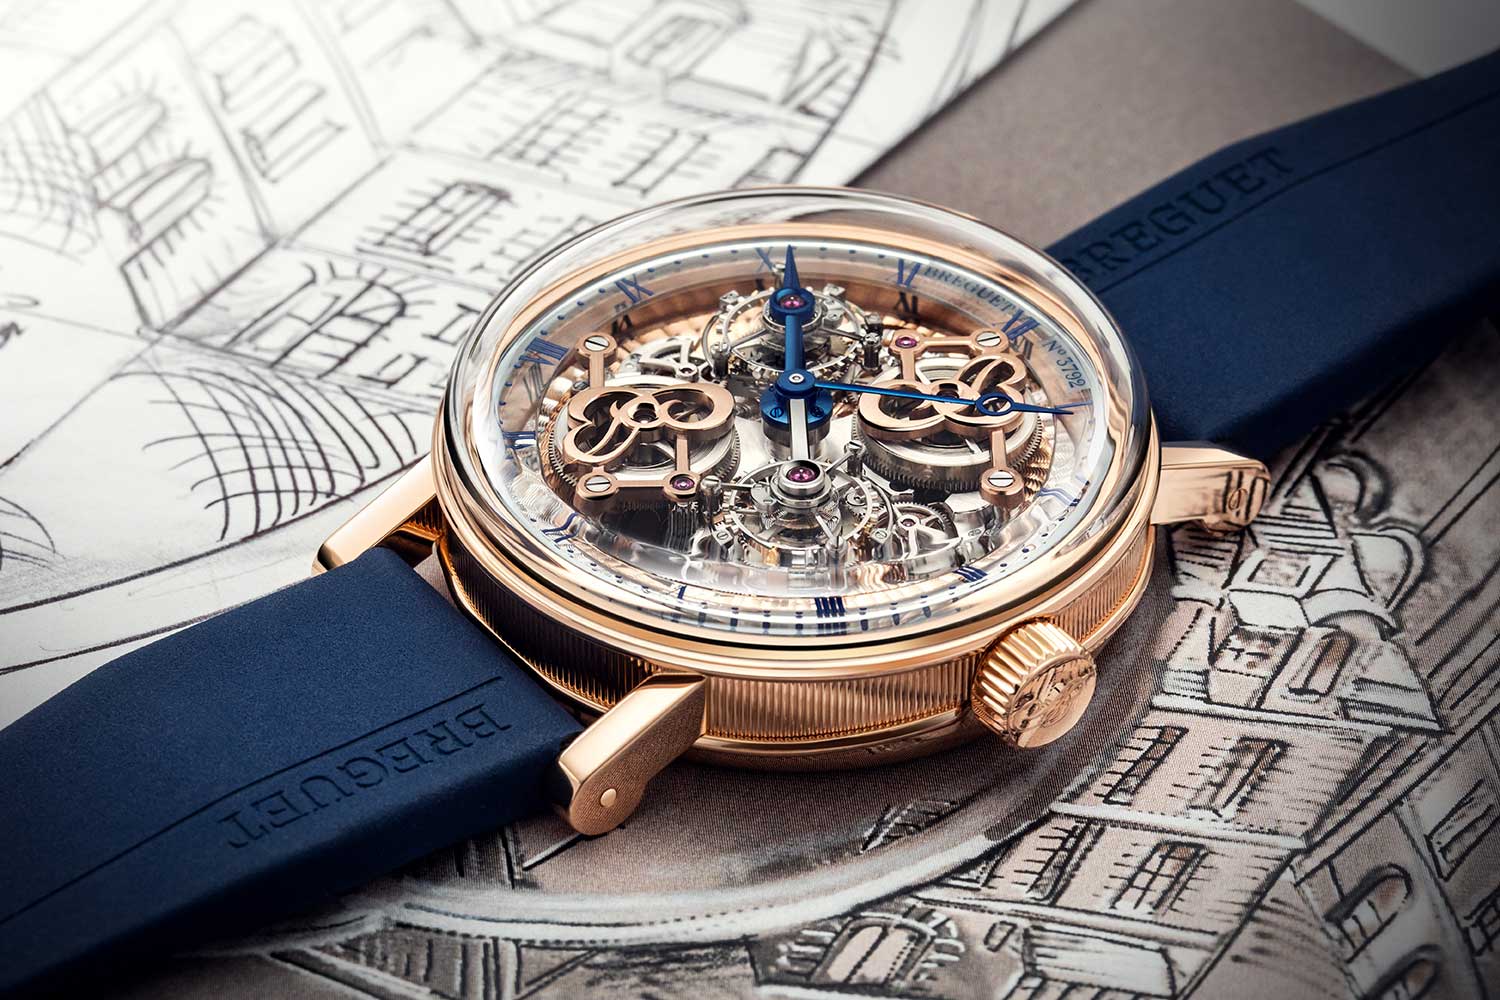 Đồng hồ Breguet Classique Double Tourbillon Quai de l'Horloge 5345